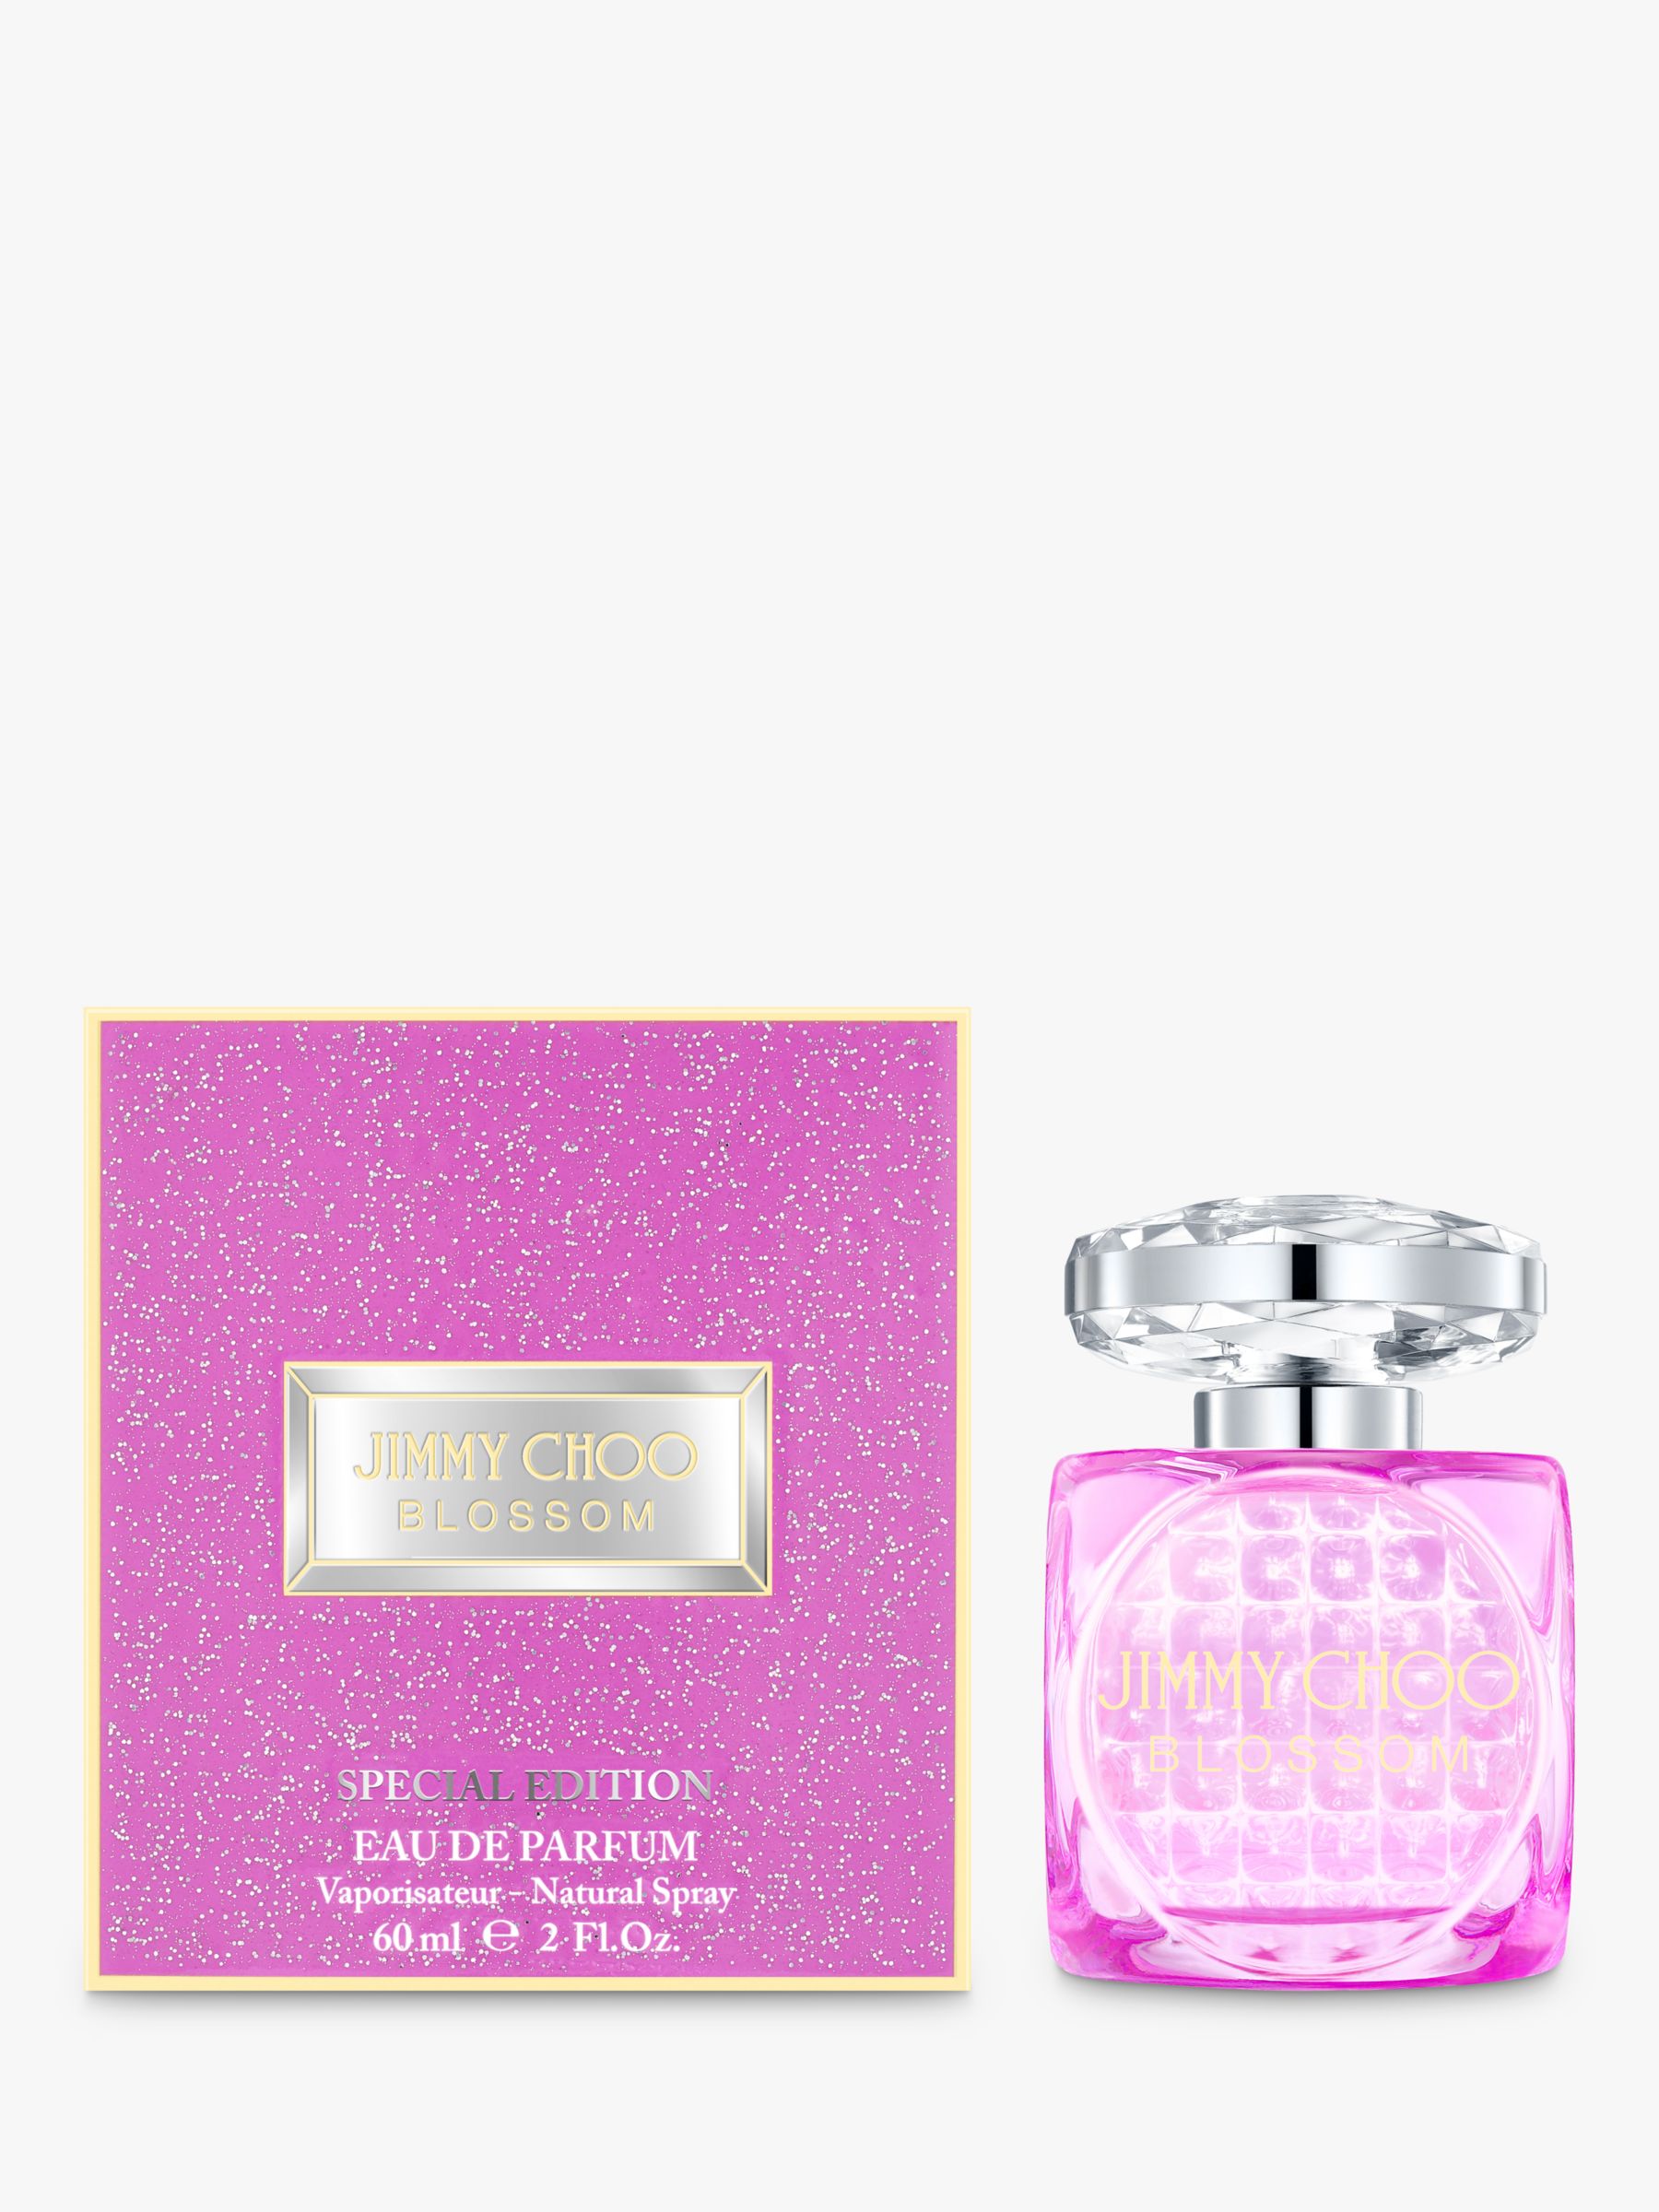 Jimmy Choo Blossom Special Edition Eau de Parfum, 60ml 2